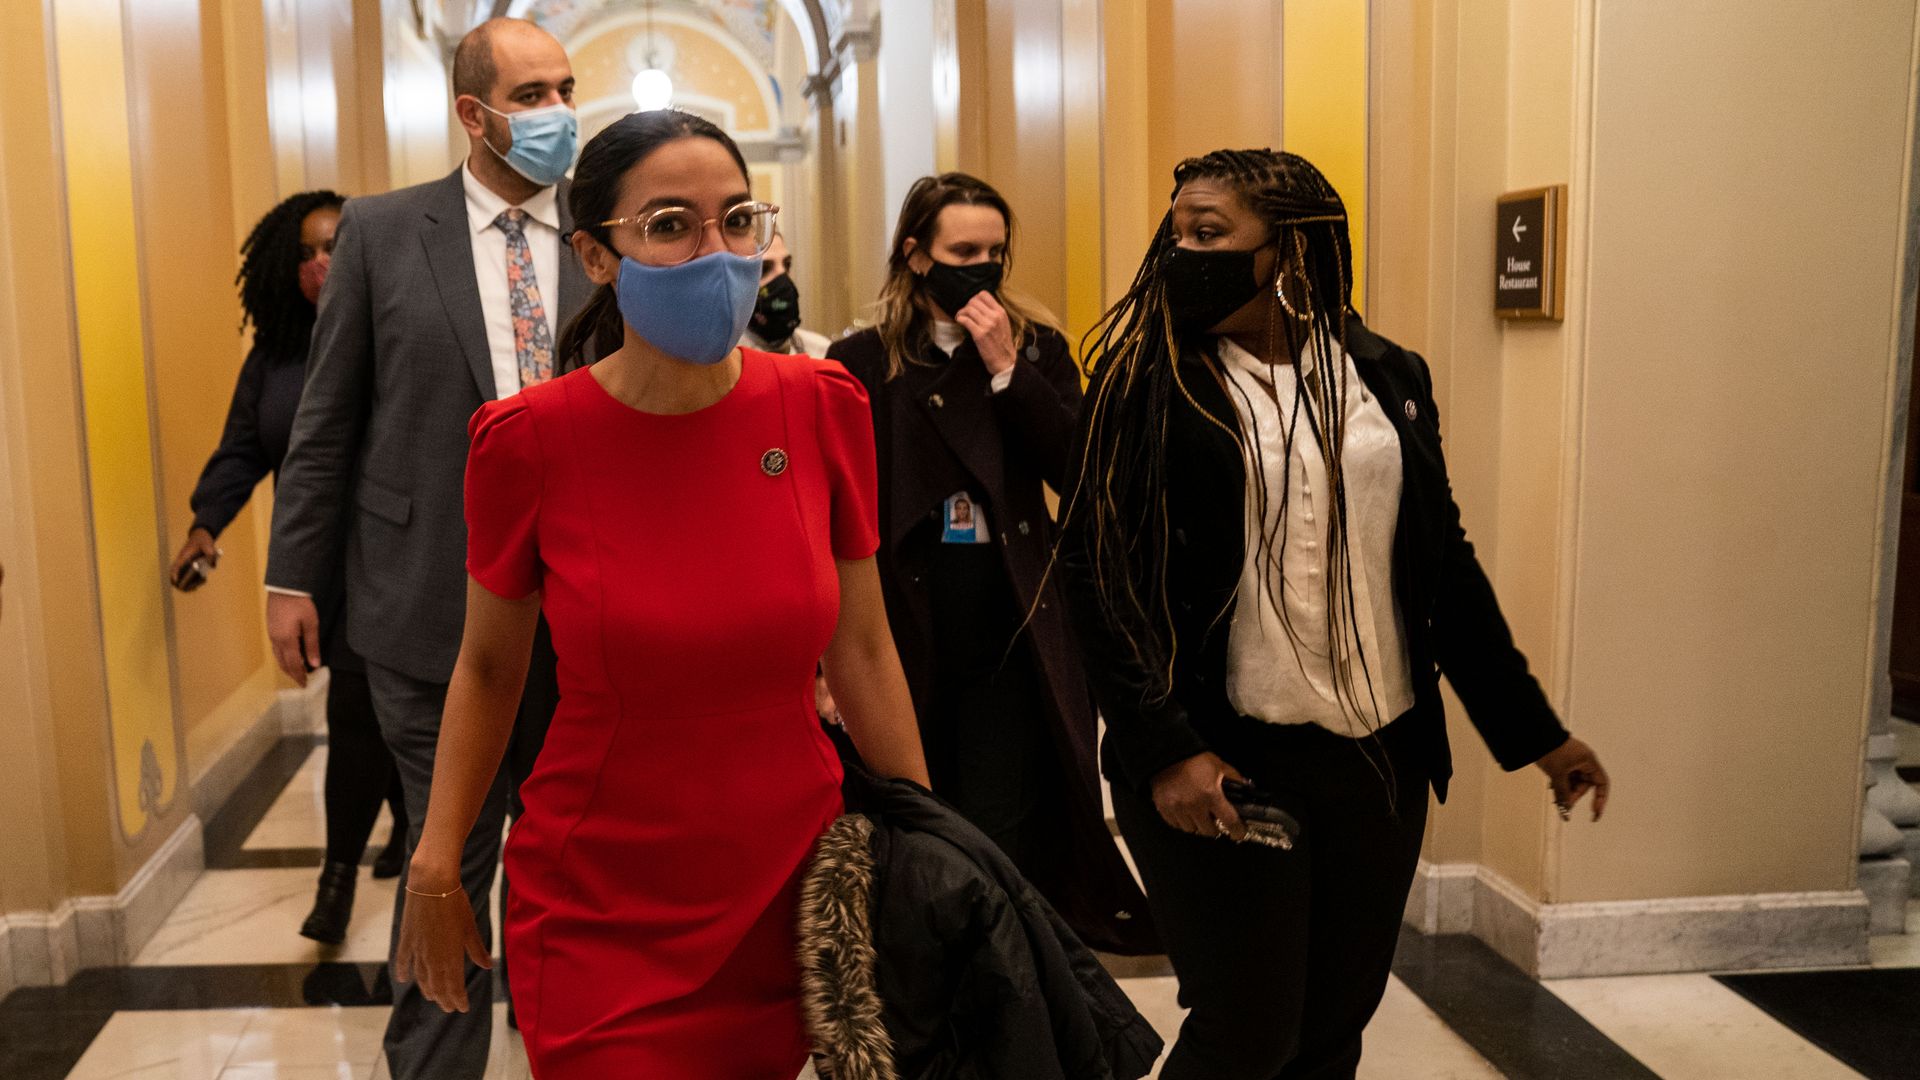 Reps. Alexandria Ocasio-Cortez and Cori Bush are seen walking through the U.S. Capitol last month.